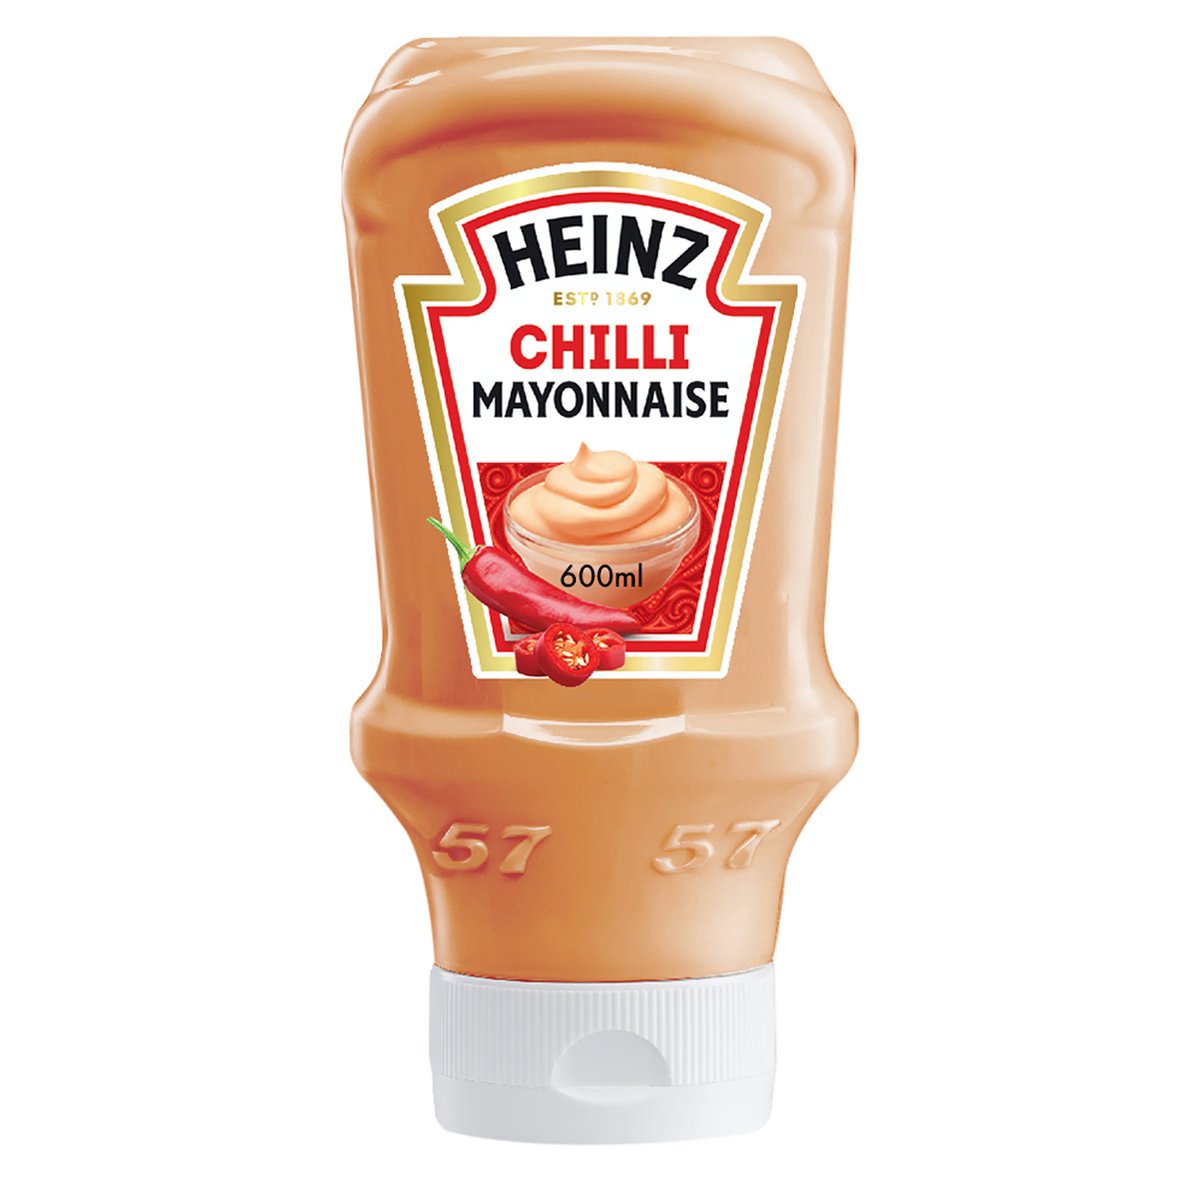 Heinz Hot Chili ketchup Top Down 400ml - CHOCKIES BELGE